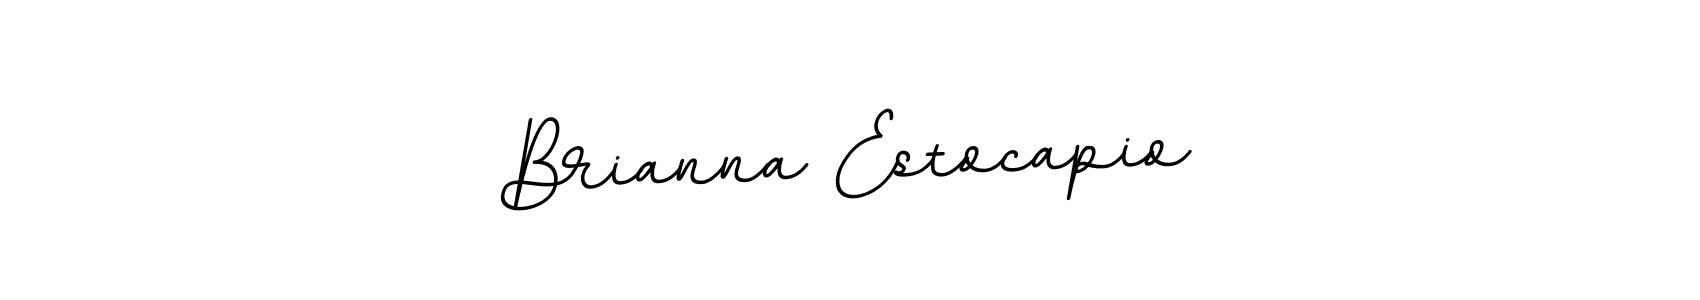 Make a beautiful signature design for name Brianna Estocapio. Use this online signature maker to create a handwritten signature for free. Brianna Estocapio signature style 11 images and pictures png